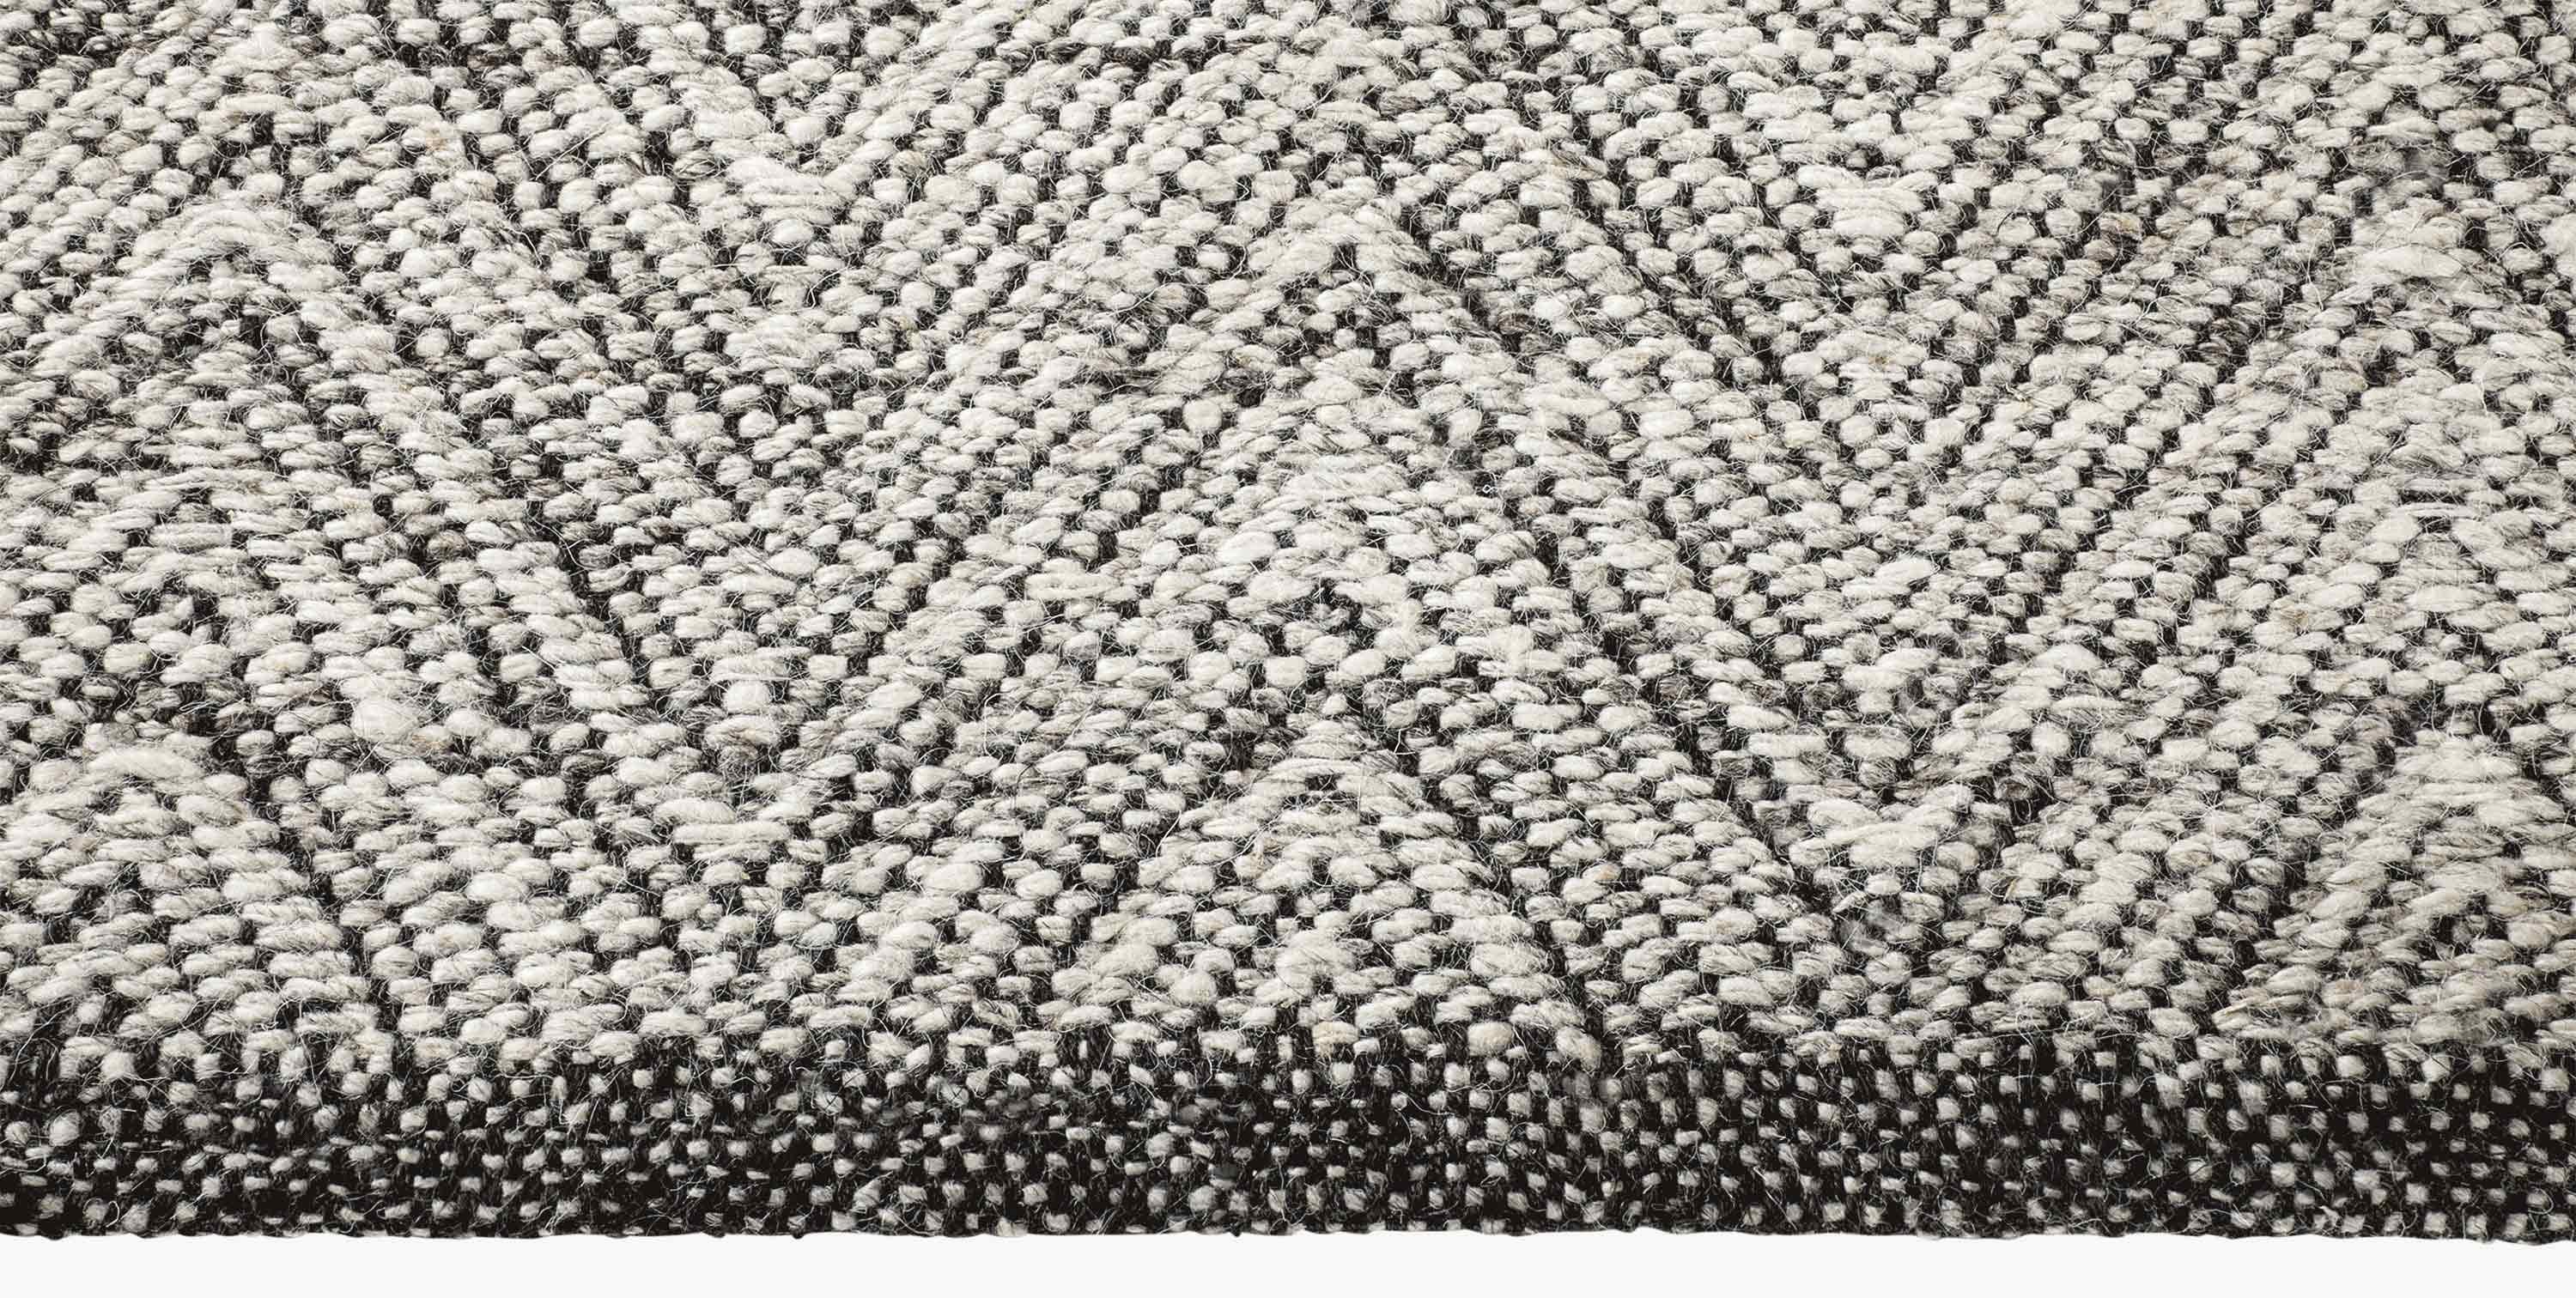 For Sale: Silver Ben Soleimani Ceyah Rug– Hand-woven Plush Textured Wool + Linen Charcoal 8'x10' 3